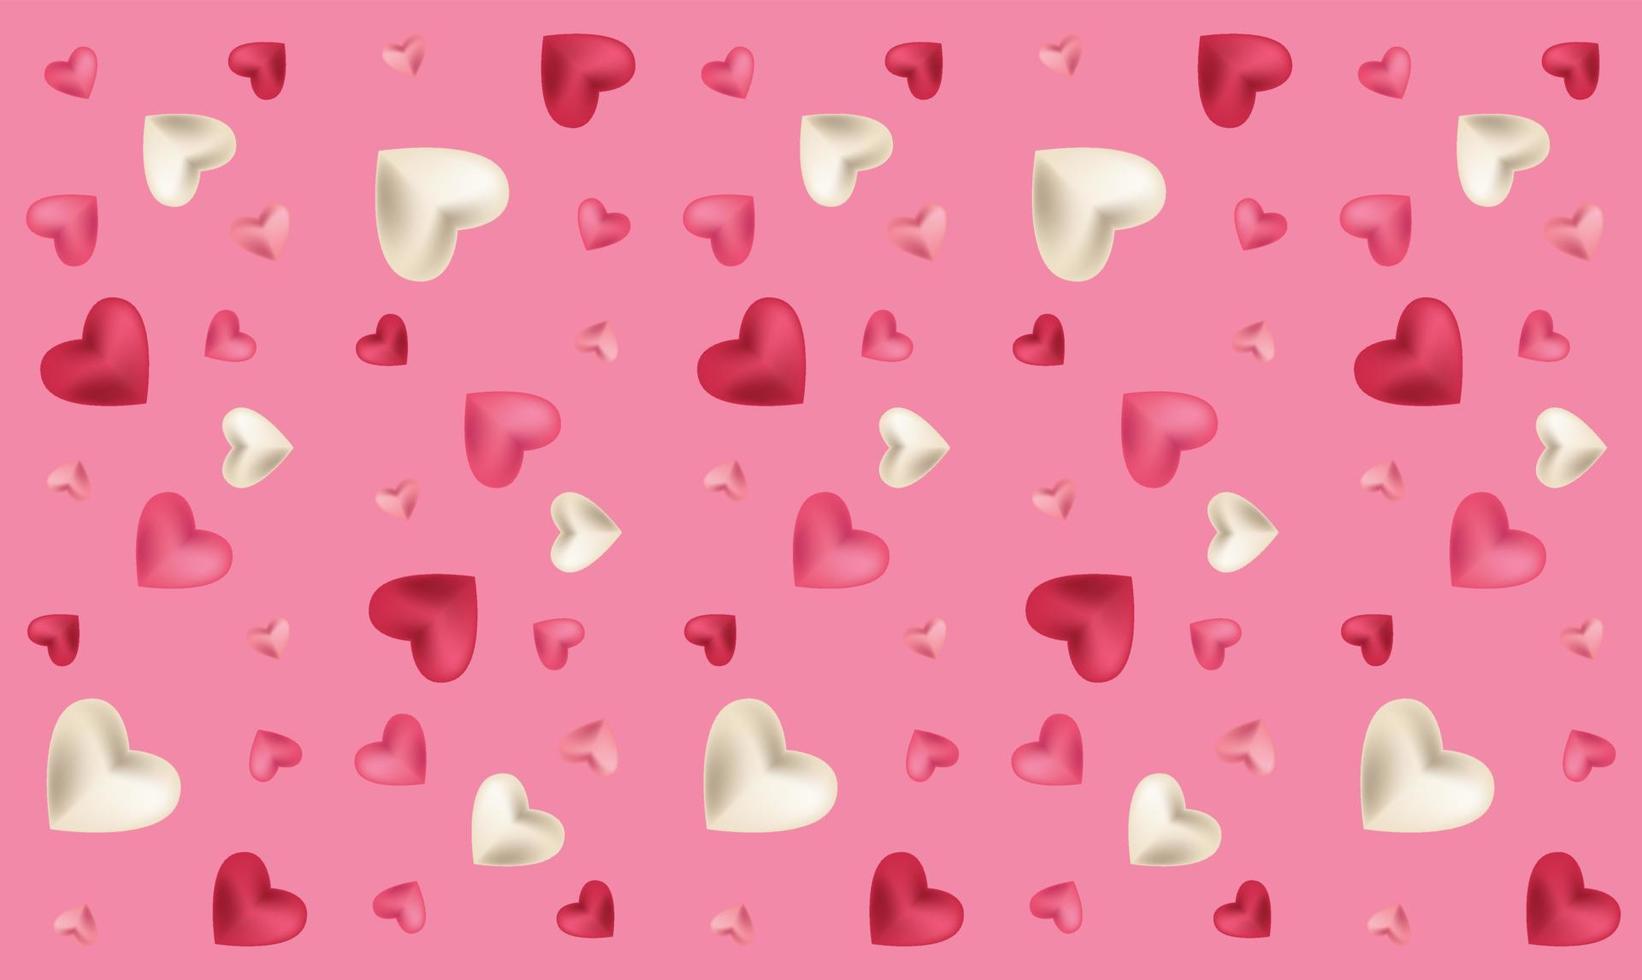 happy valentine's day love wallpaper background heart vector